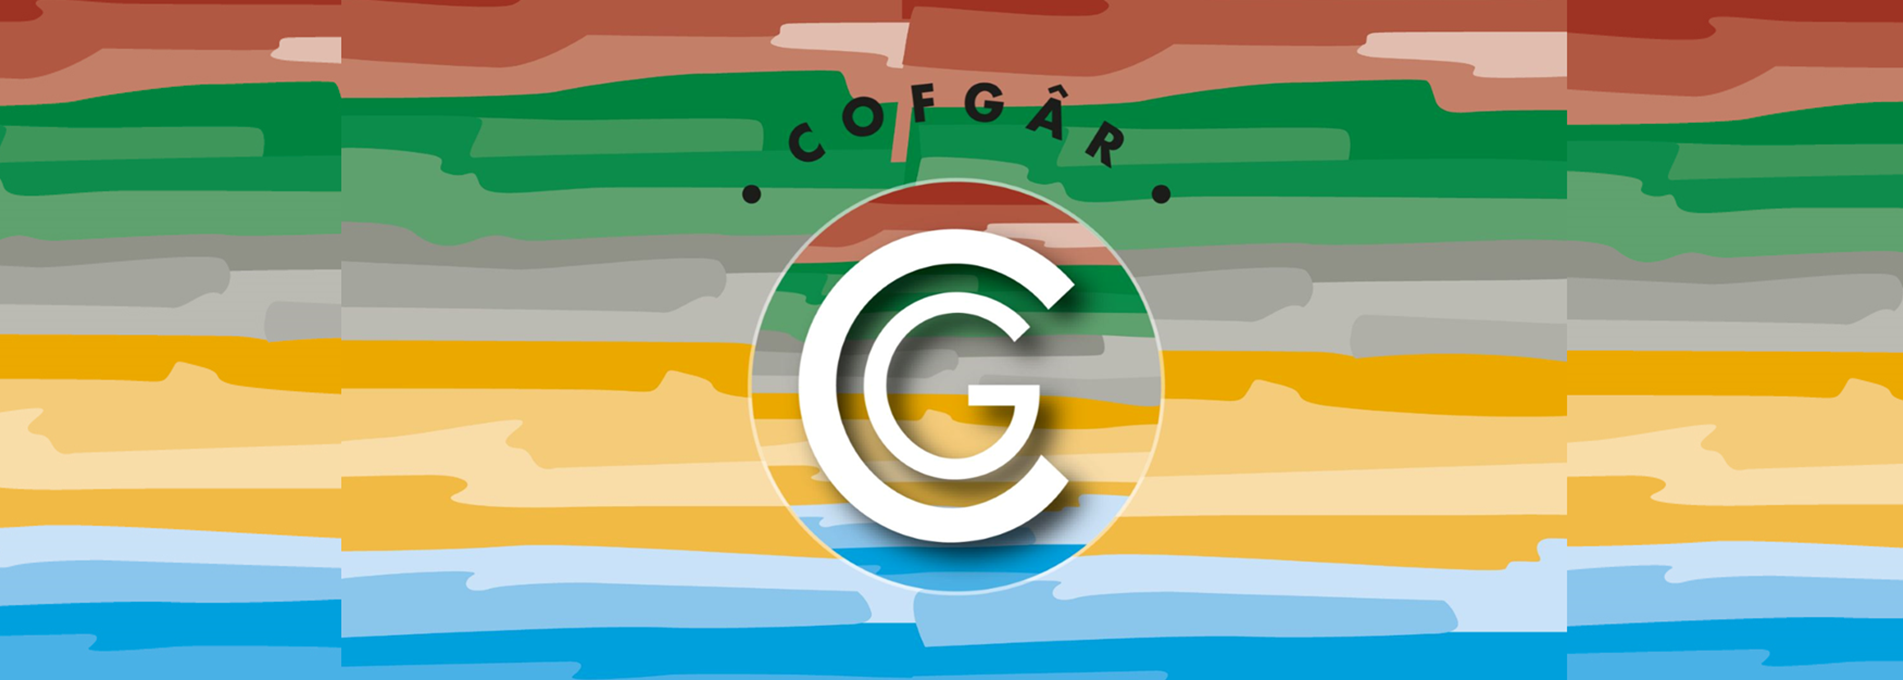 CofGar Logo